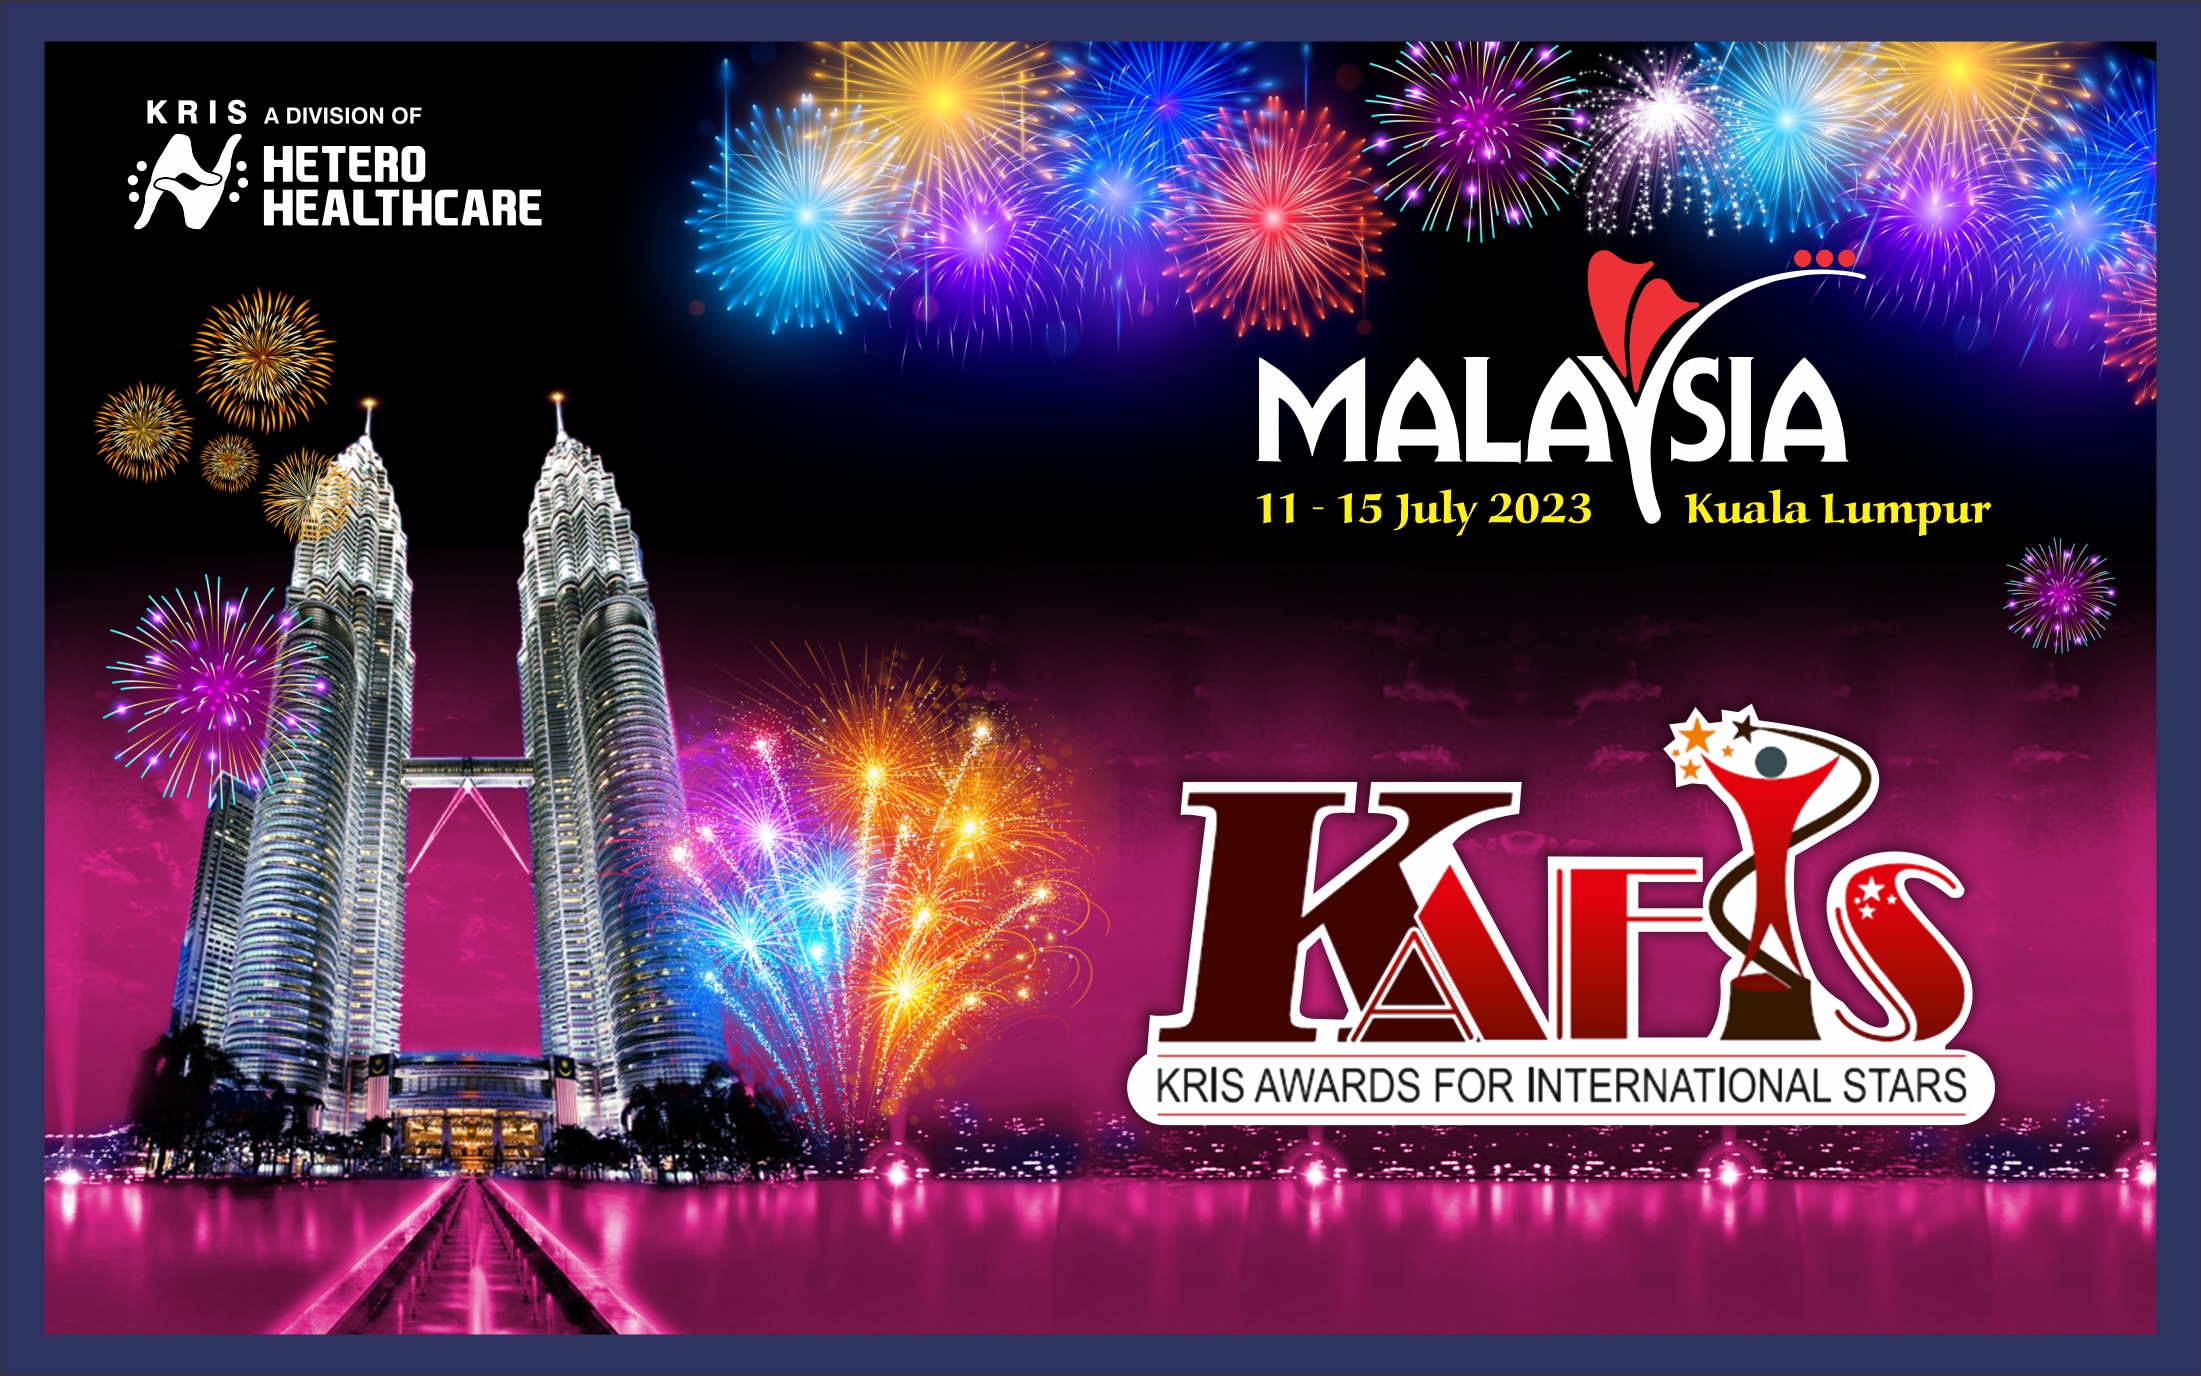 KAFIS - KRIS Awards for International Stars in Malaysia